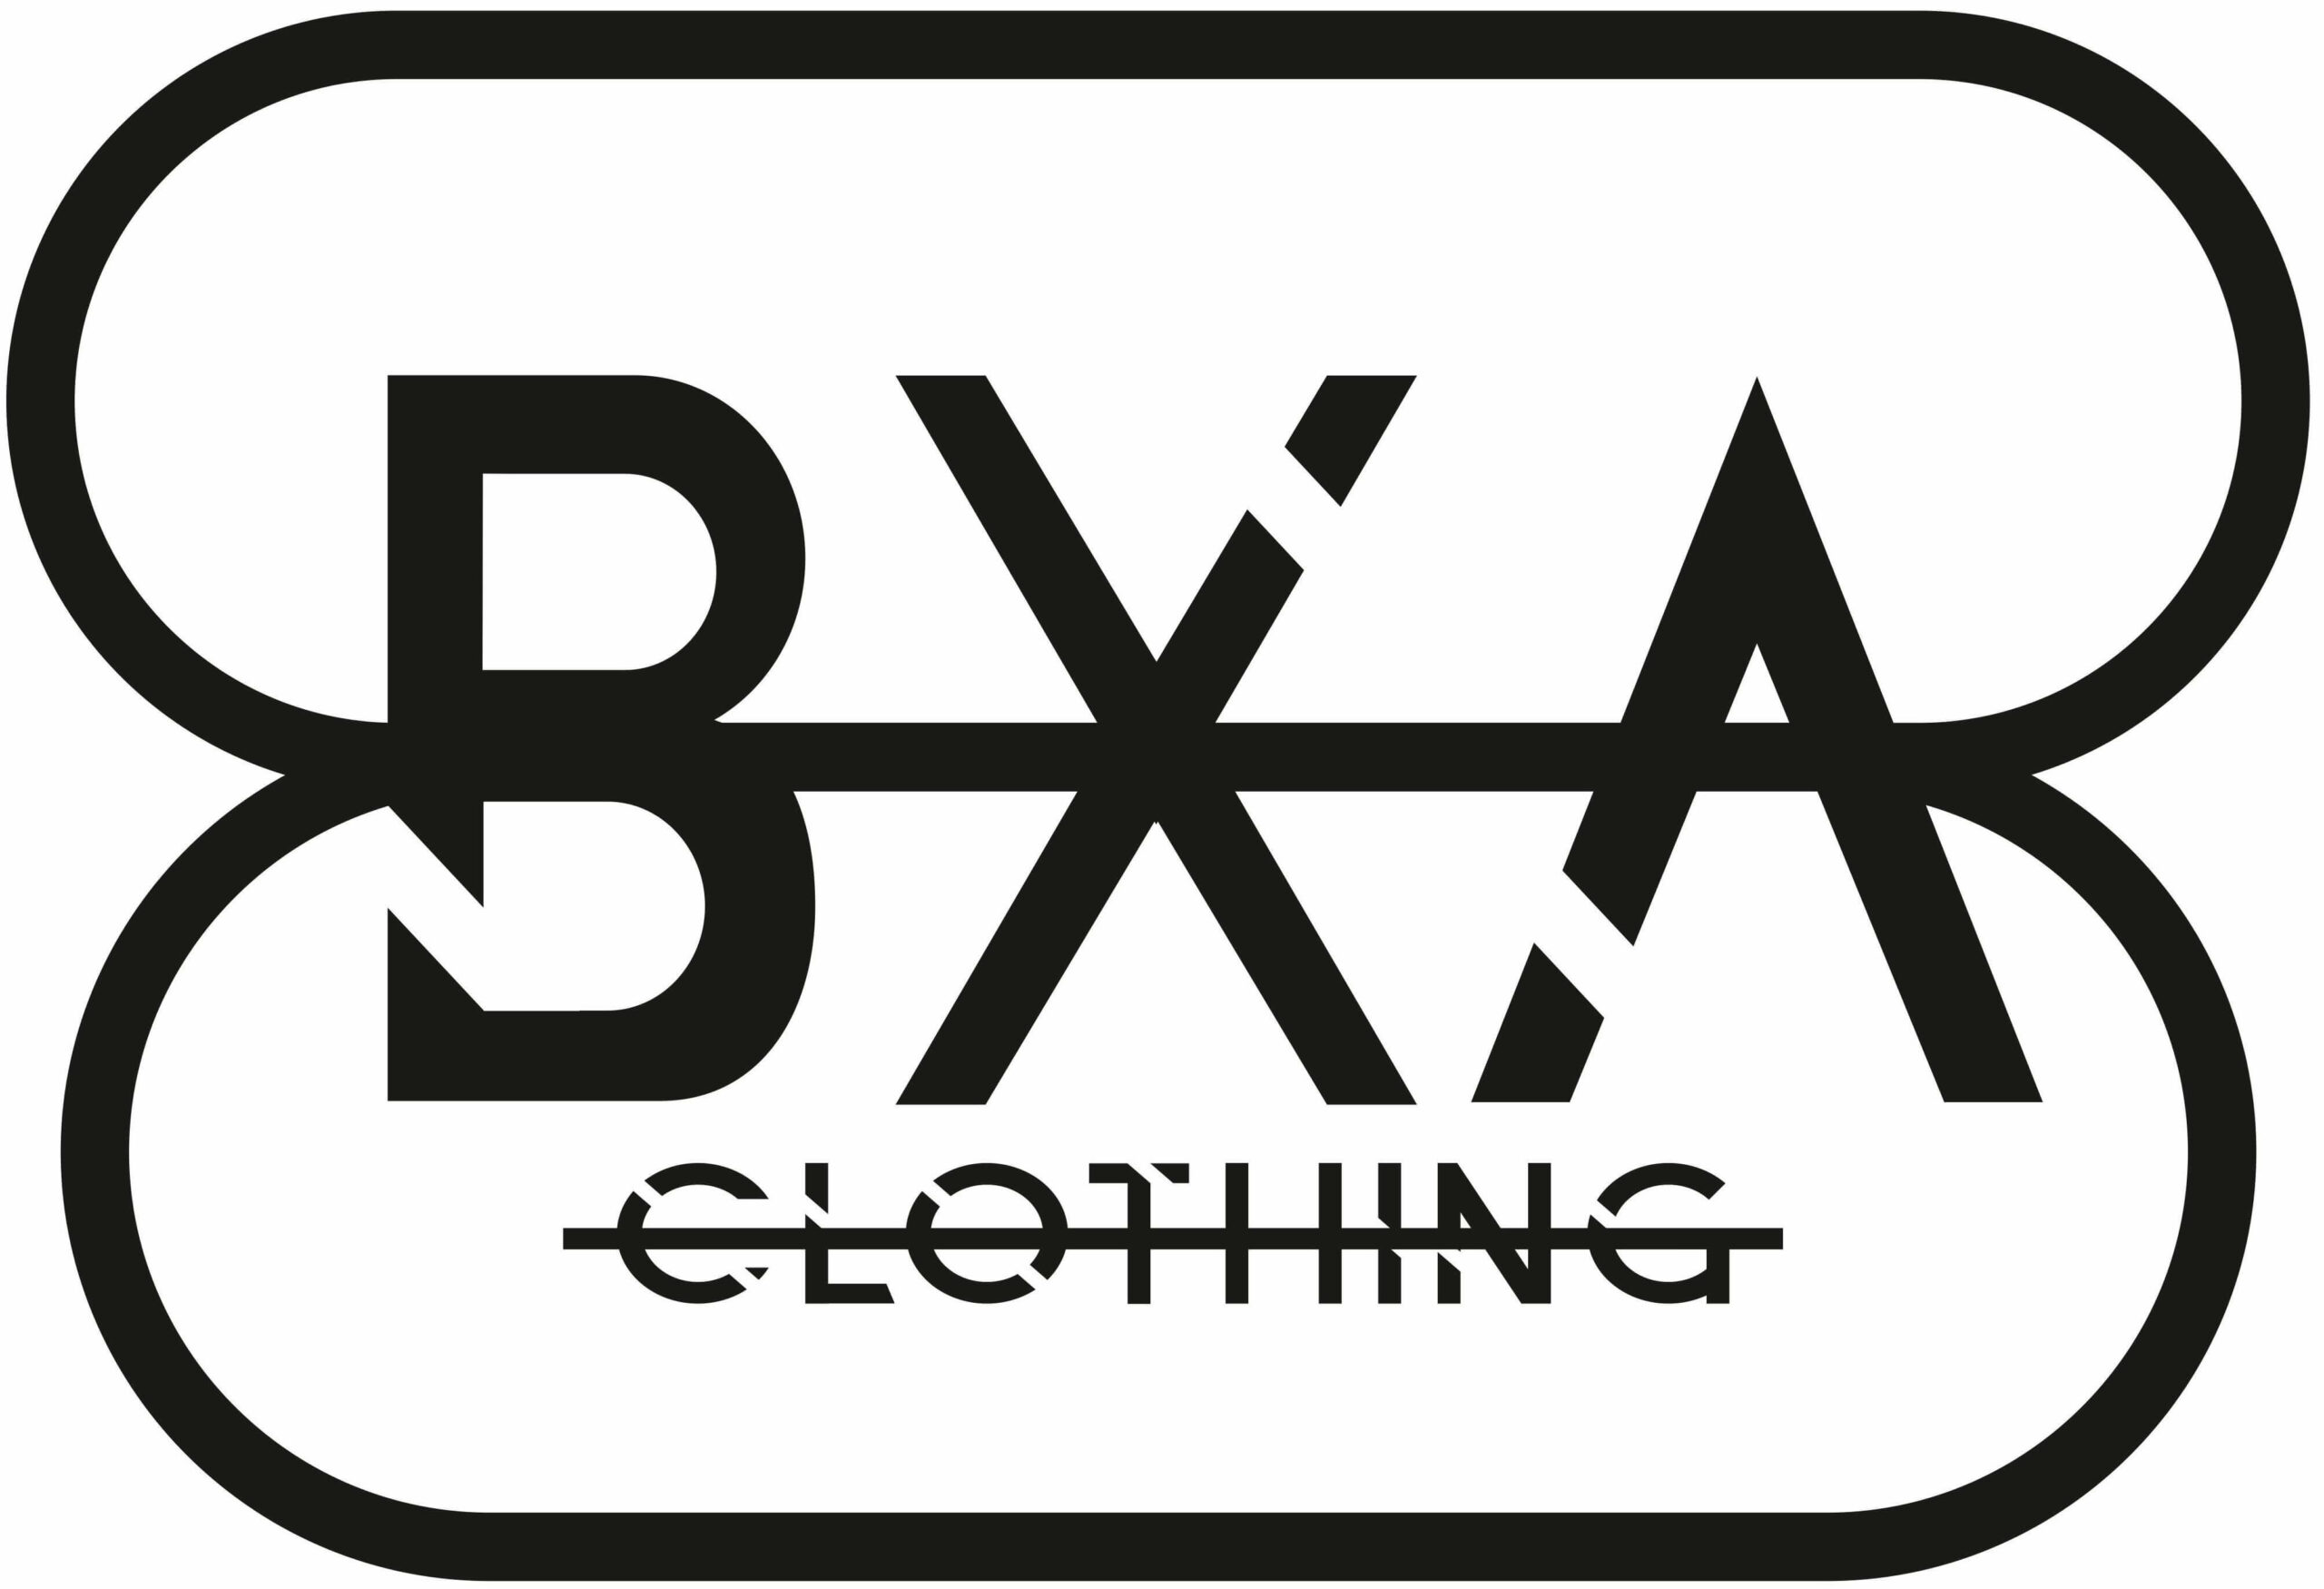 Bixair Clothing